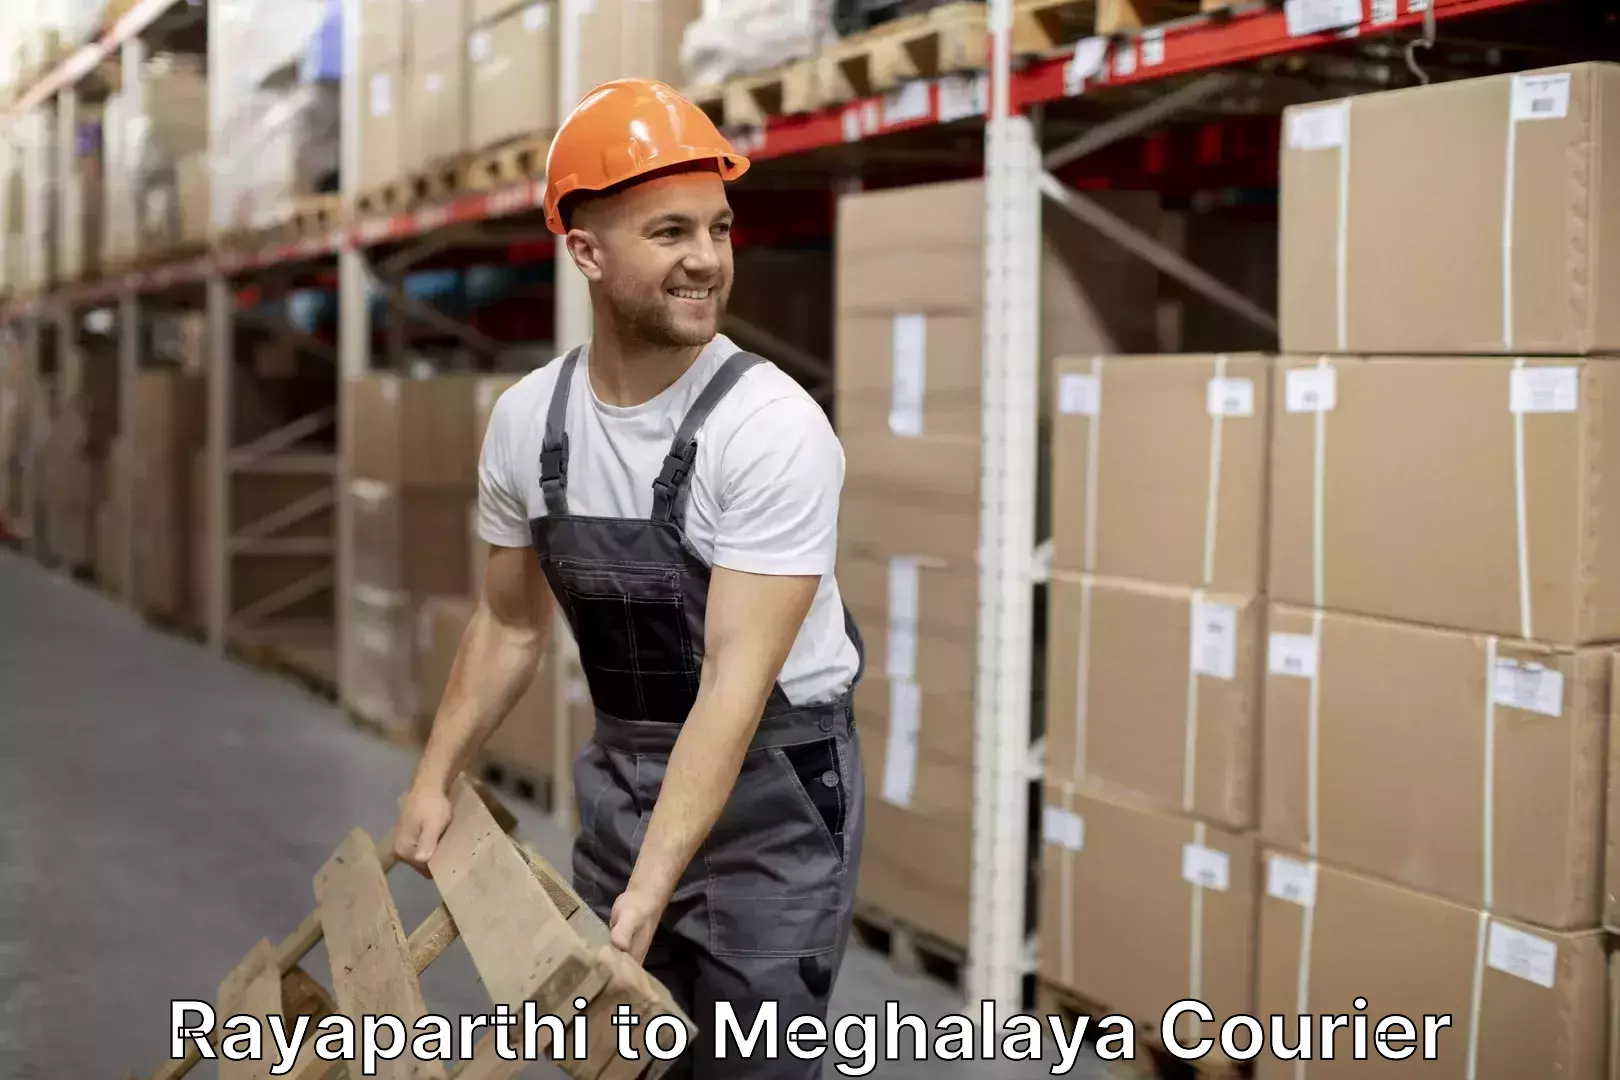 Quality moving company Rayaparthi to Meghalaya